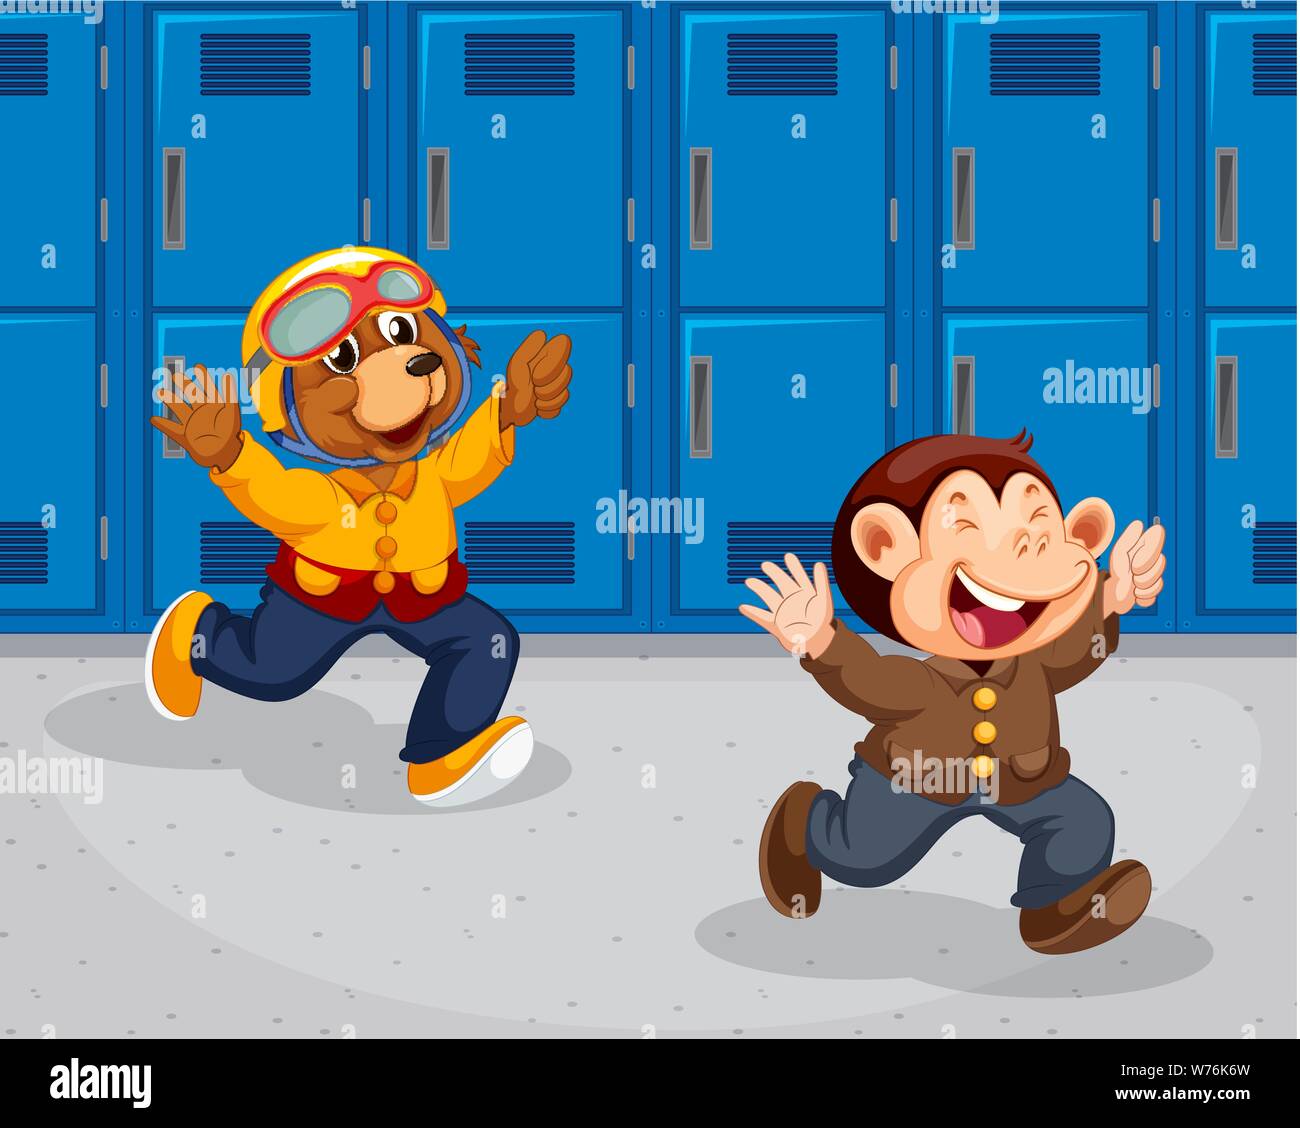 Monkey and bear running at school illustration Stock Vector